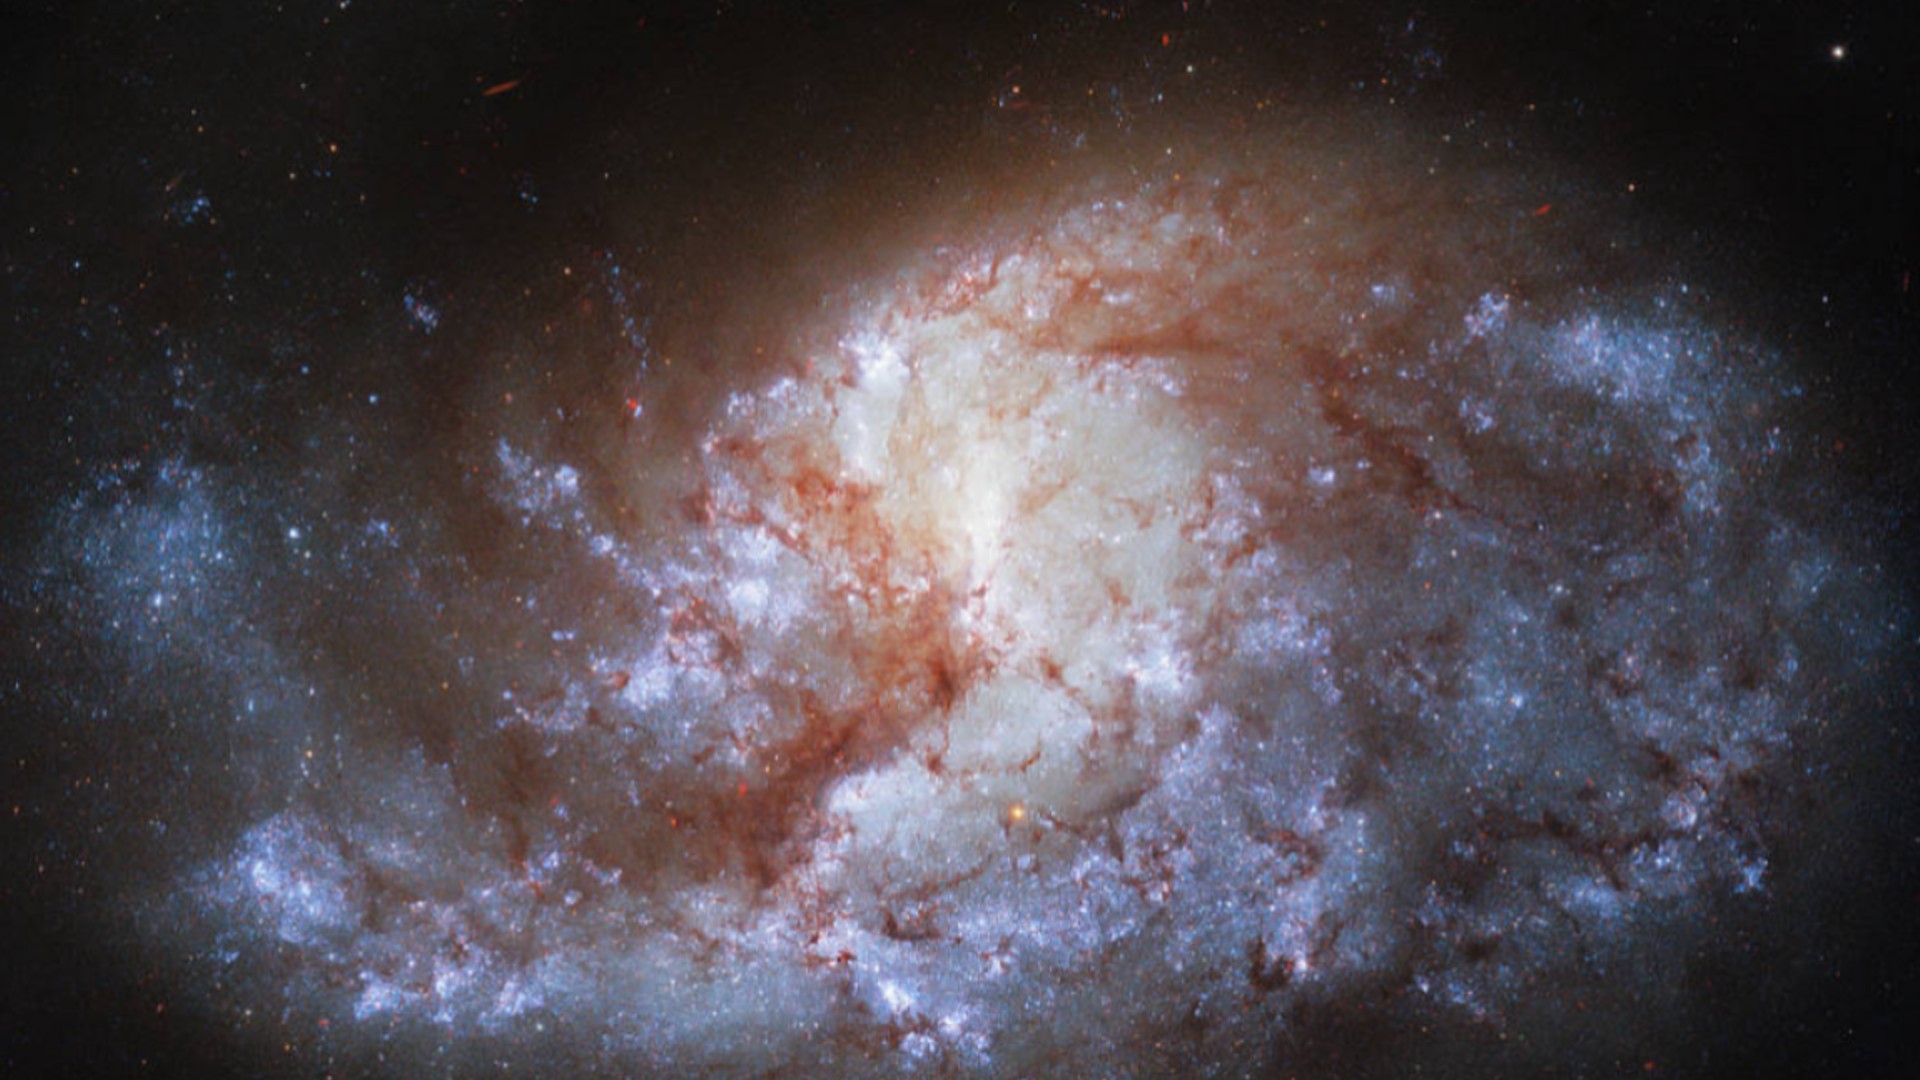 Hubble Catches a Brilliant Picture of a Vivid Spiral Galaxy.